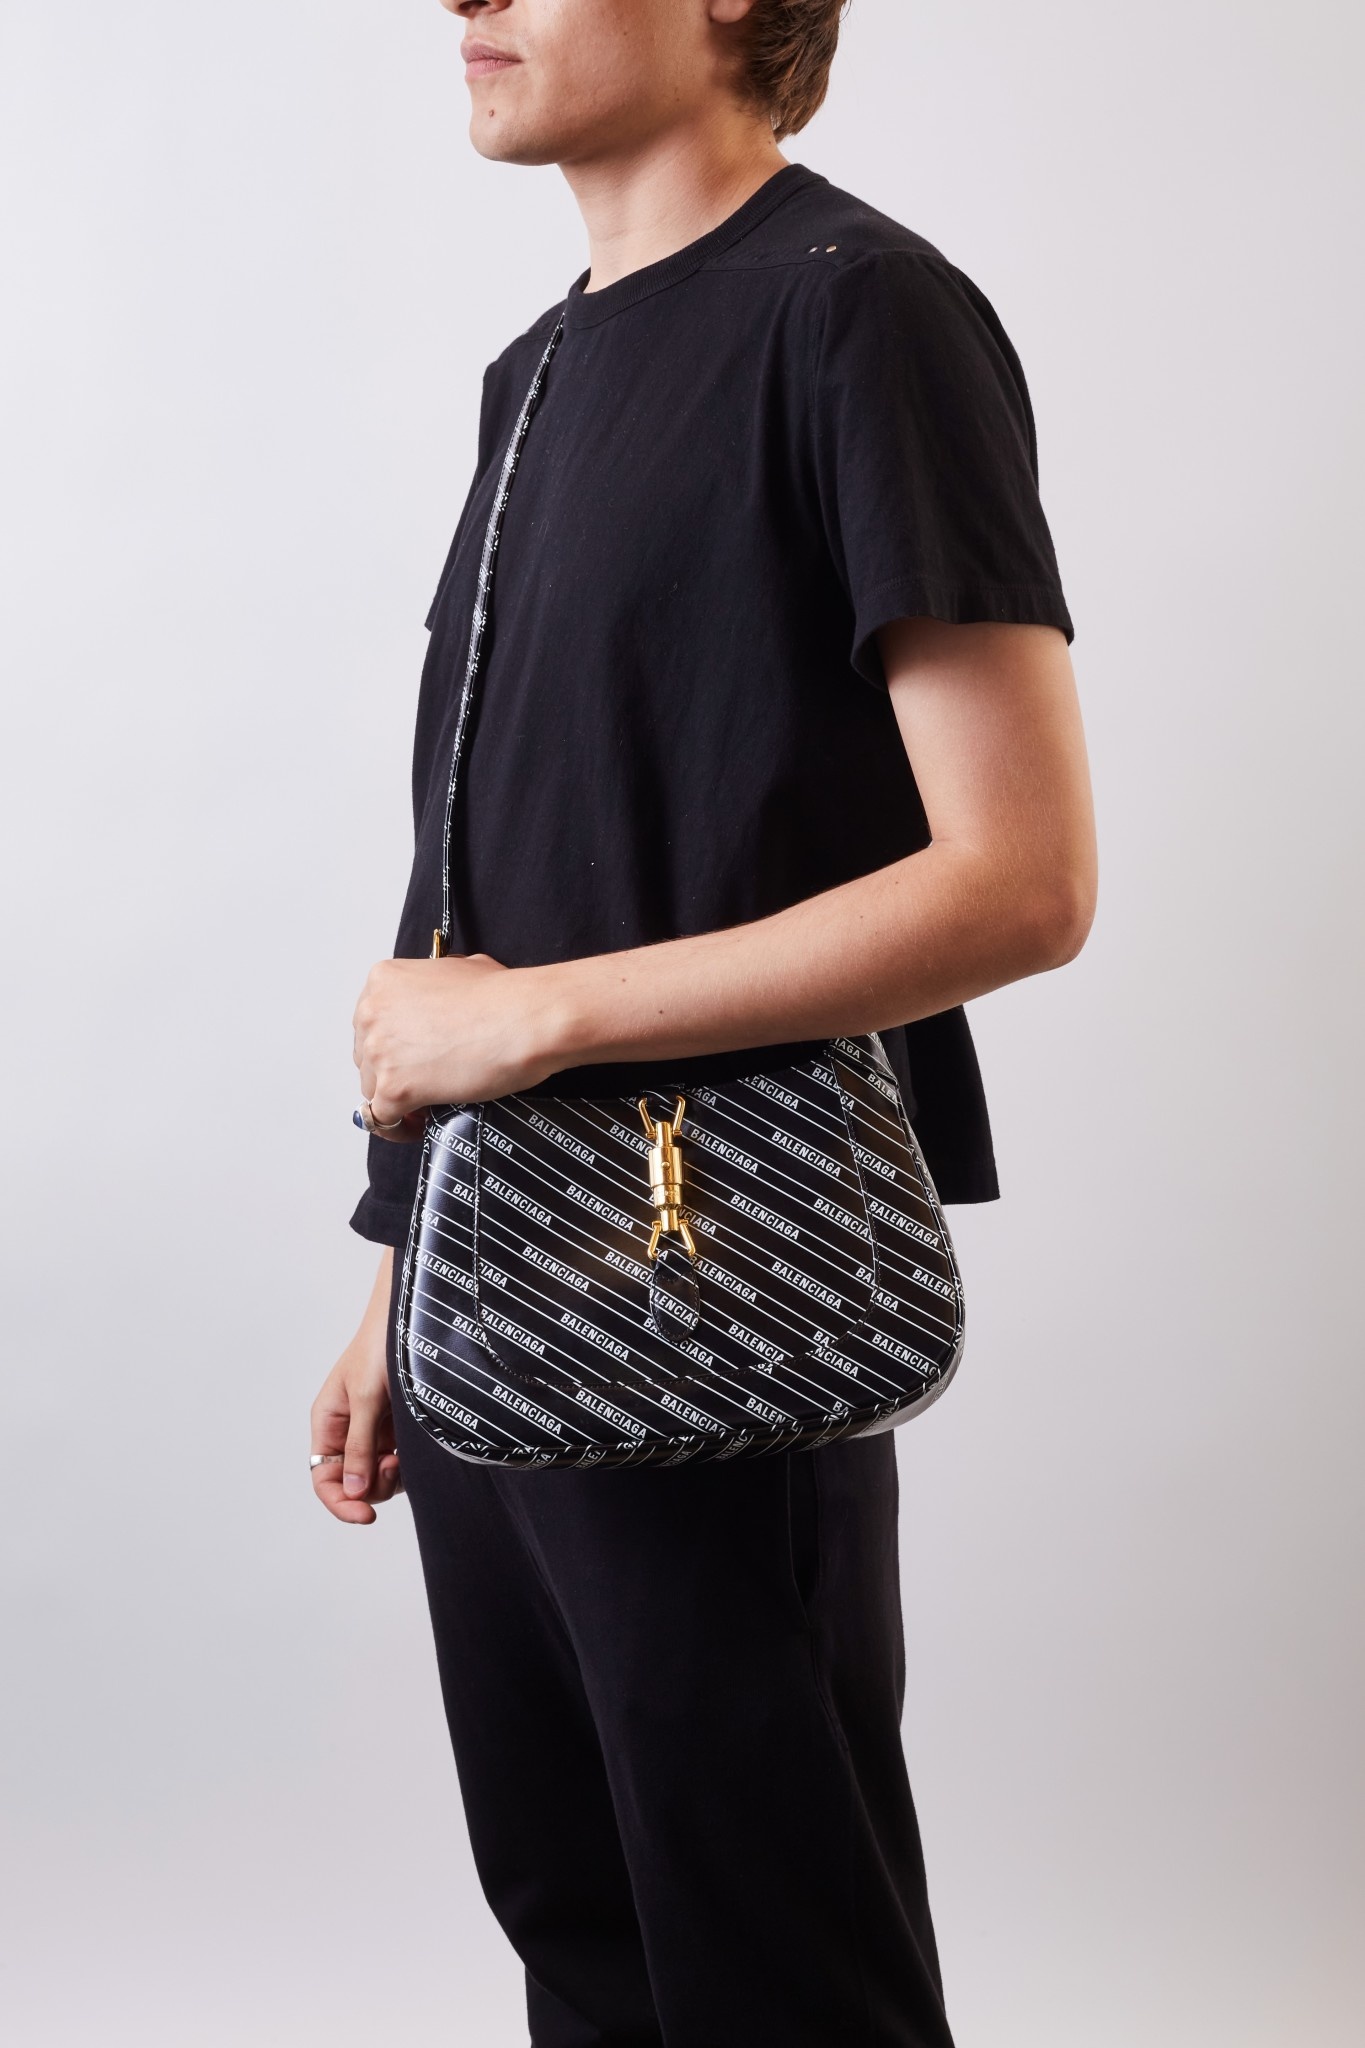 Gucci - x Balenciaga Hacker Project Jackie Shoulder bag - Catawiki